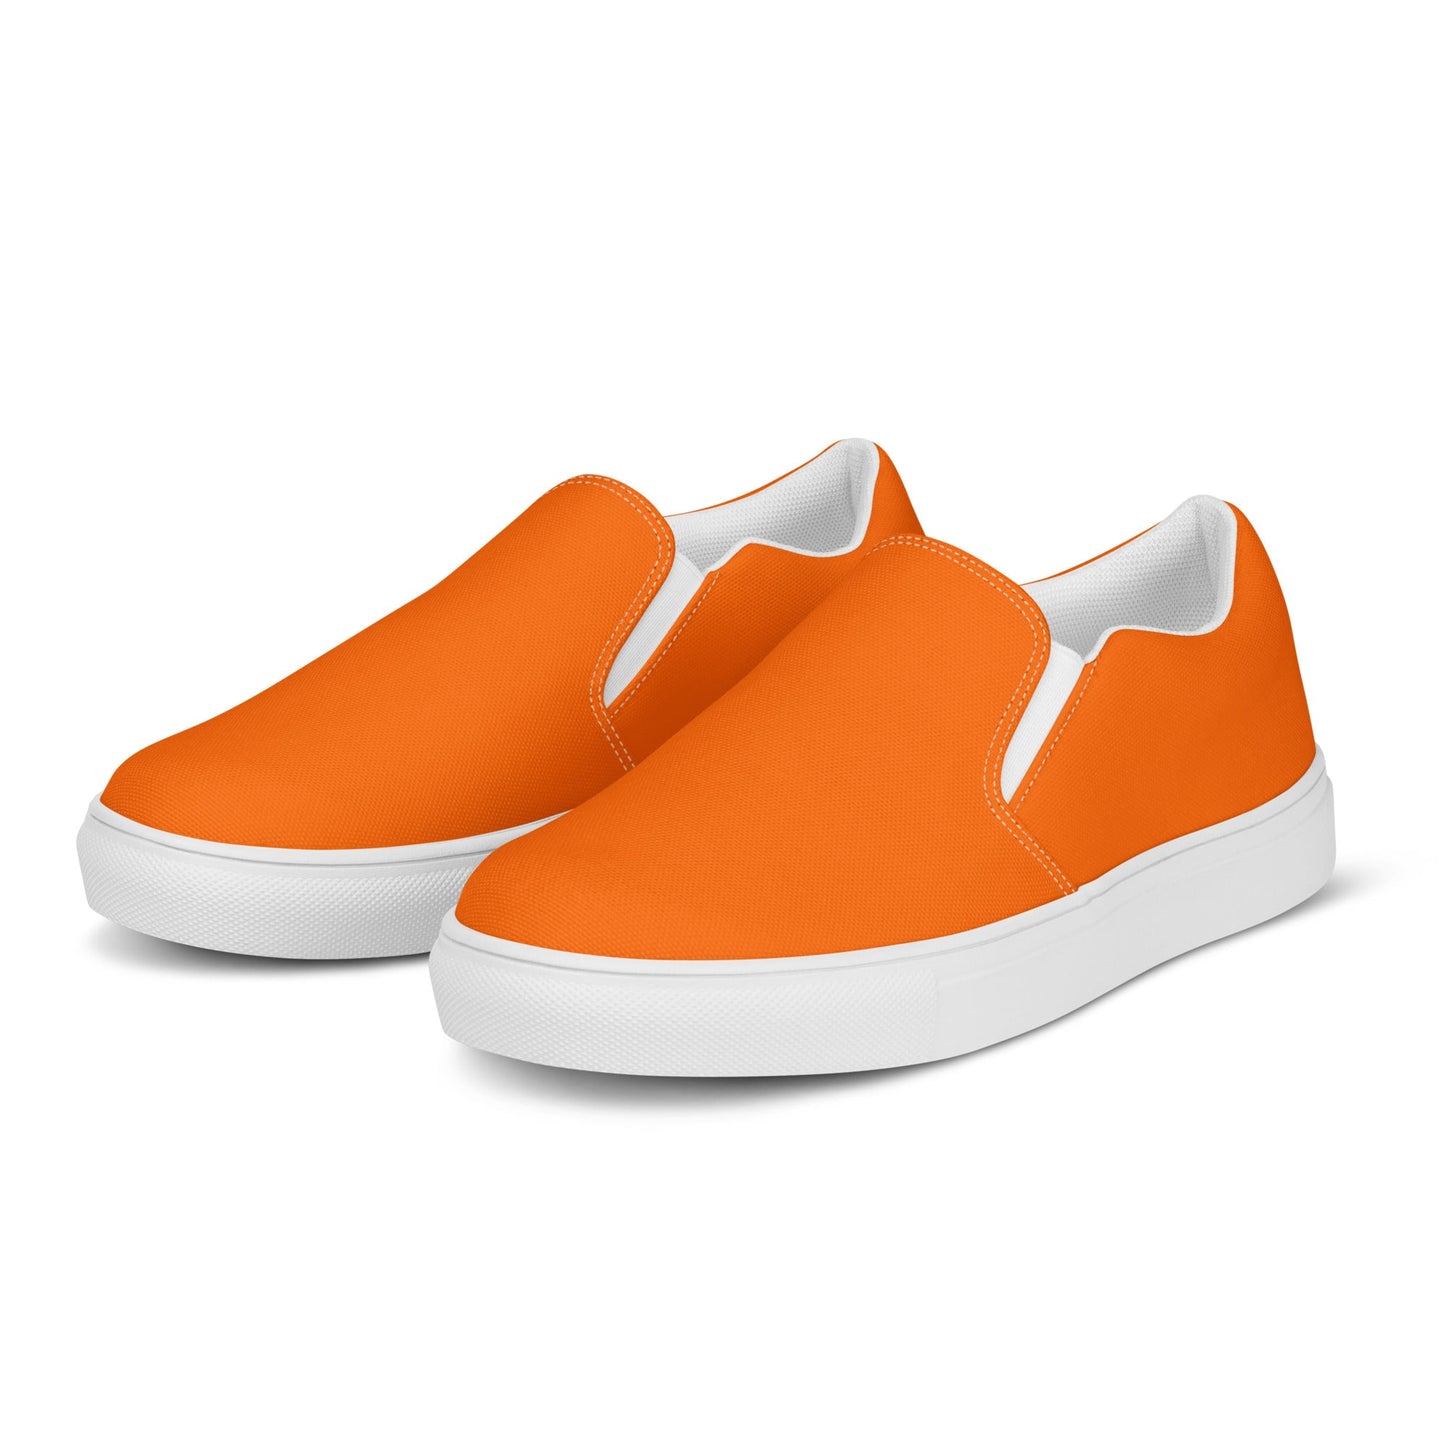 klasneakers Women’s slip-on canvas shoes - Electric Orange